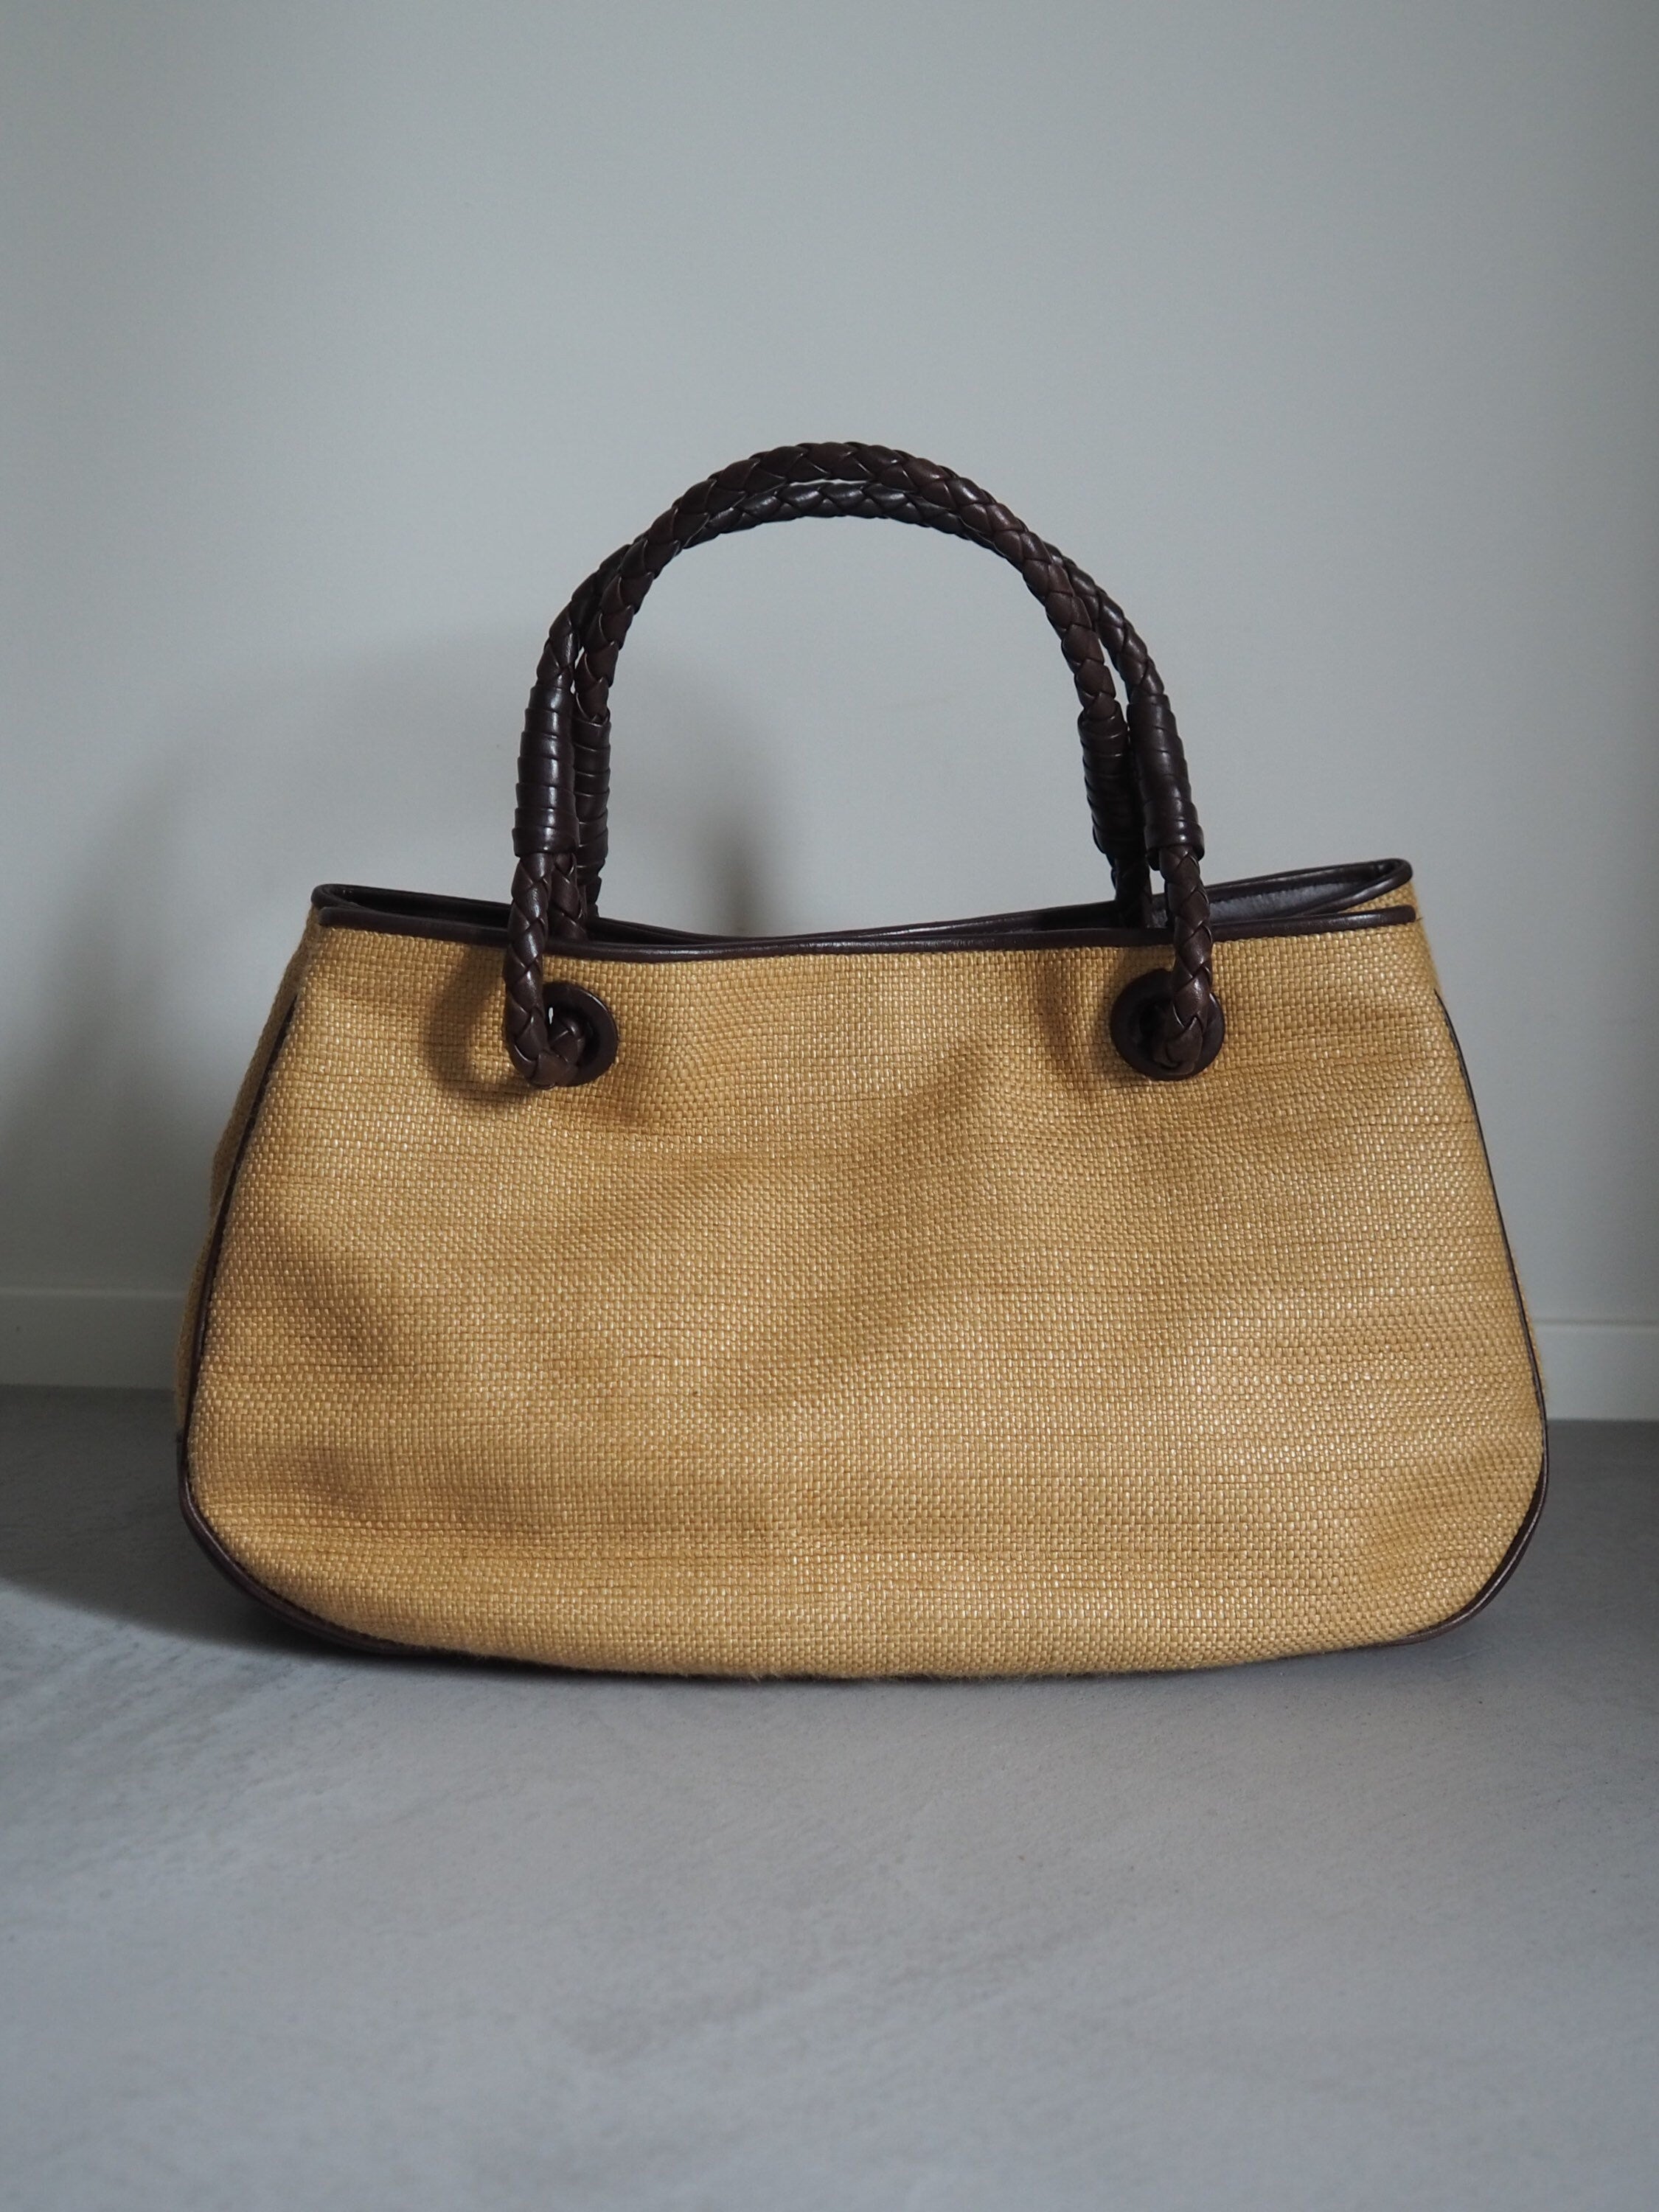 BOTTEGA VENETA Intrecciato Straw Leather Handbag Brown Vintage Authentic